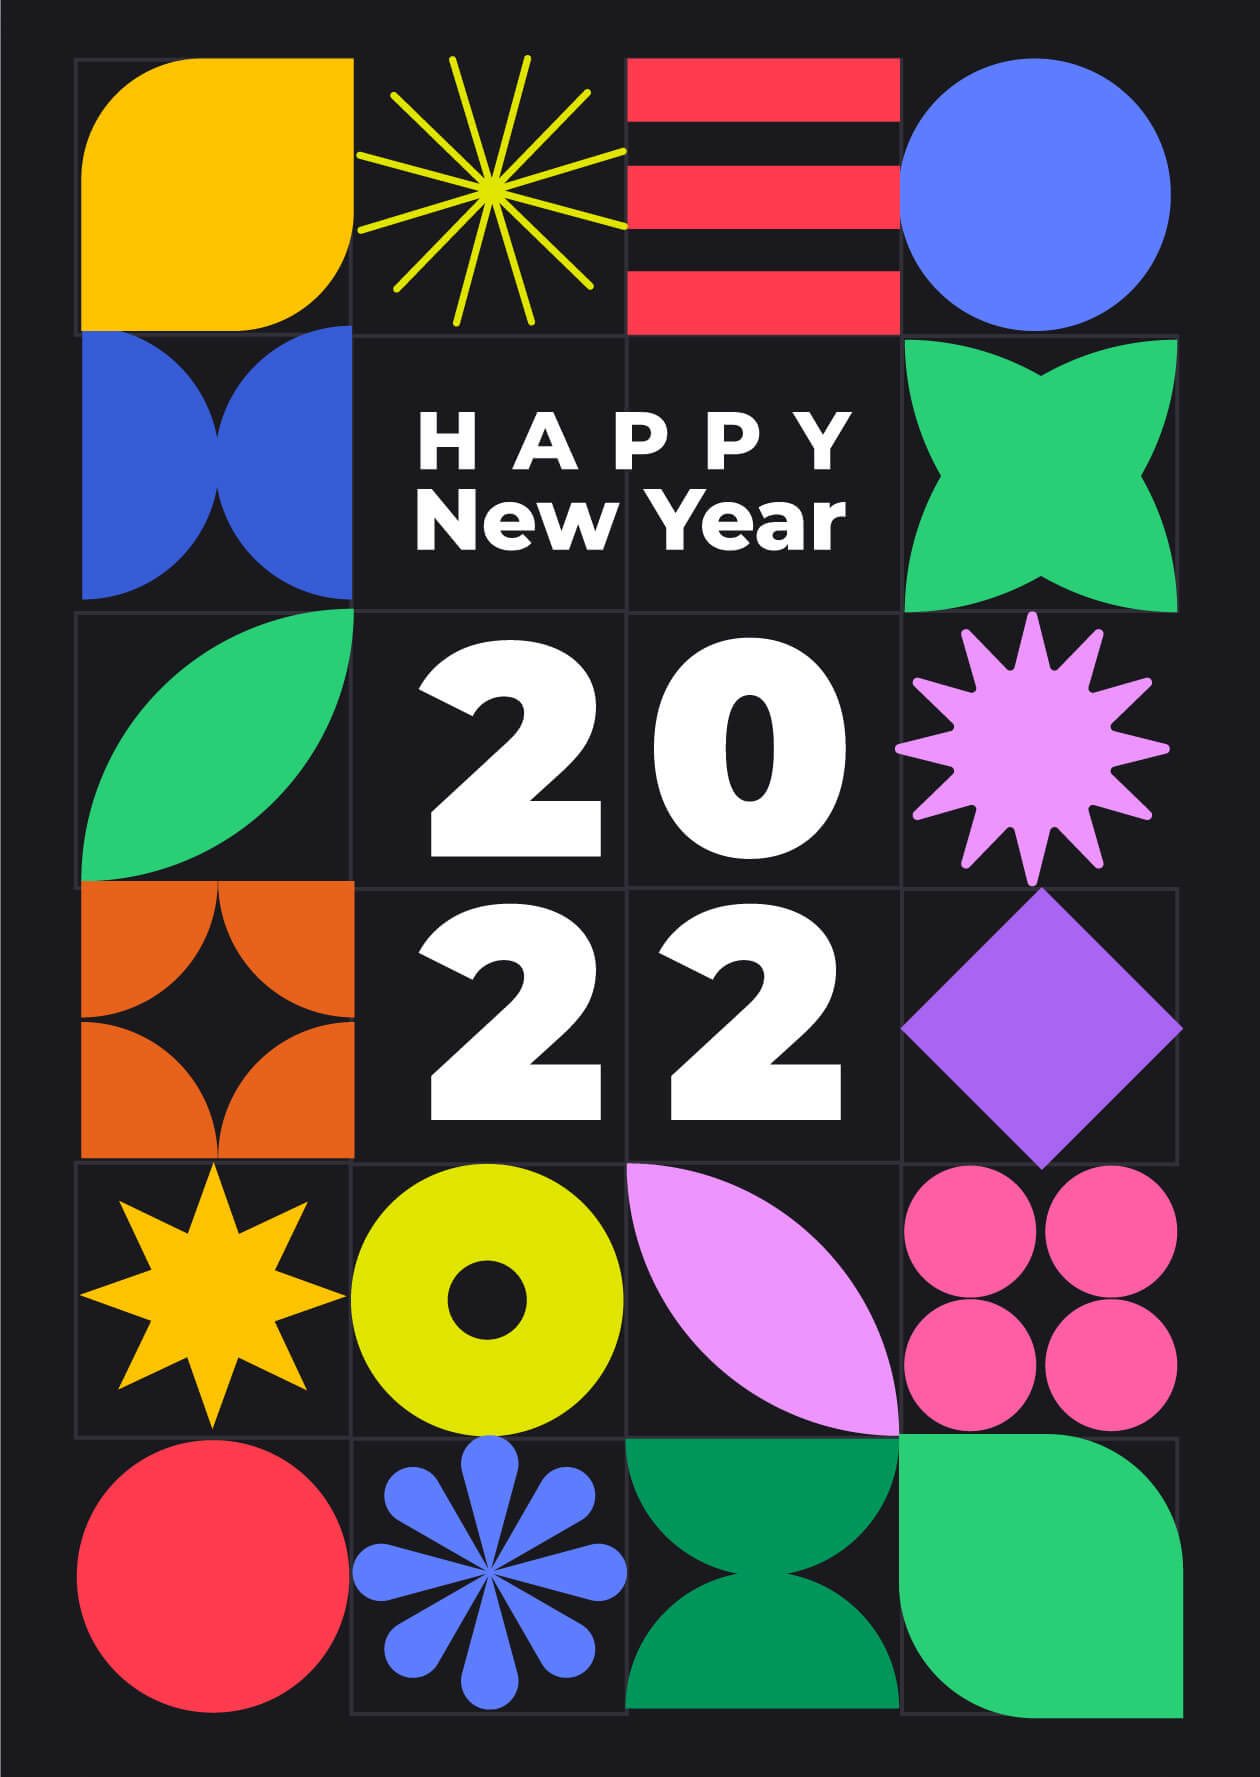 Happy New Year 2022 Image